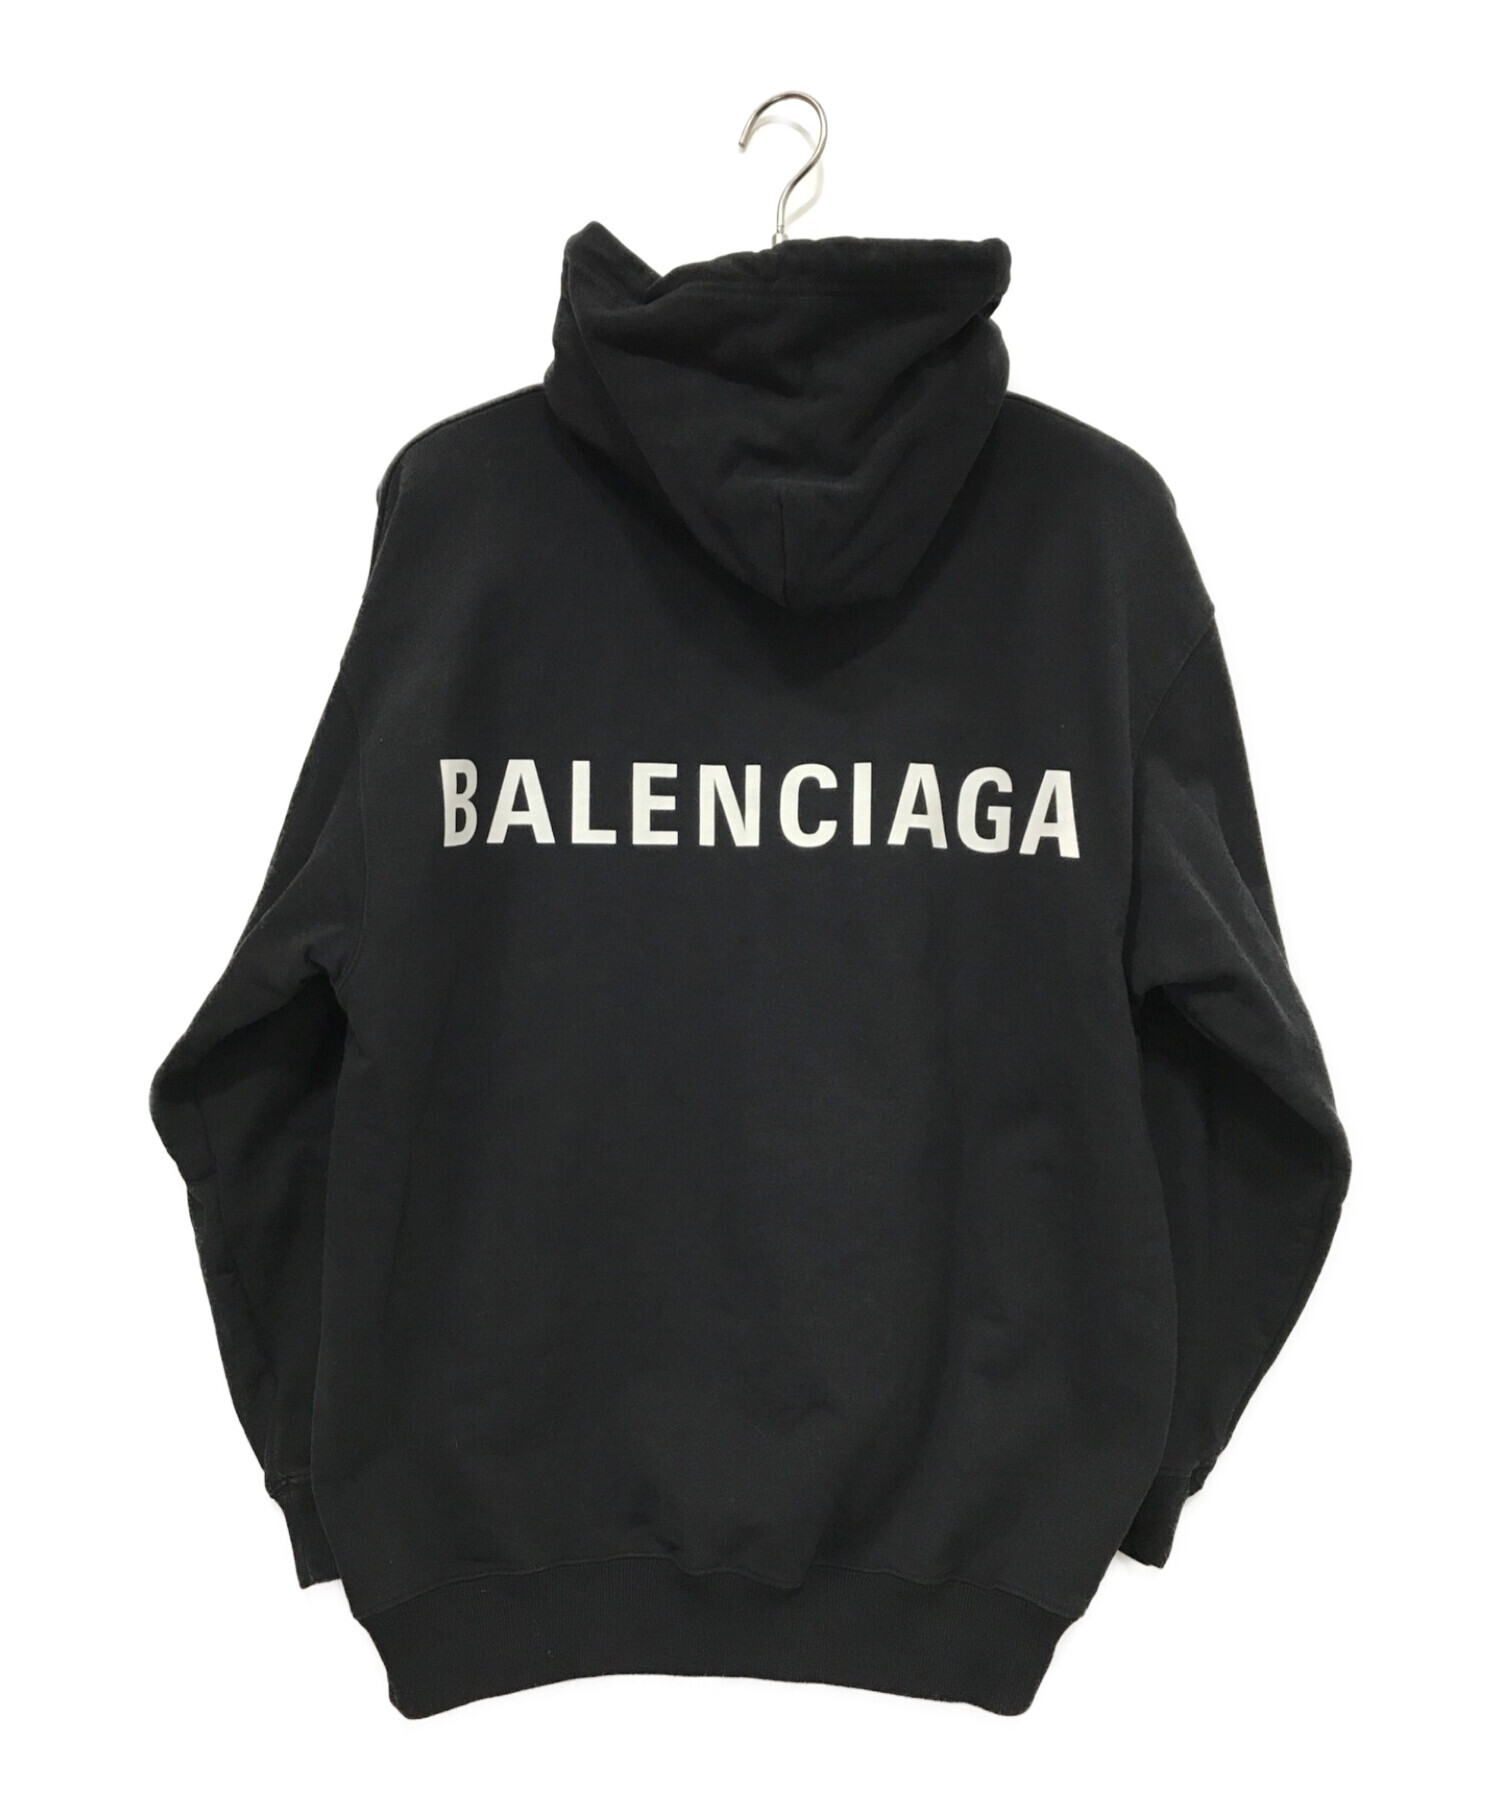 BALENCIAGA (バレンシアガ) バックロゴプリントパーカー ブラック サイズ:XS